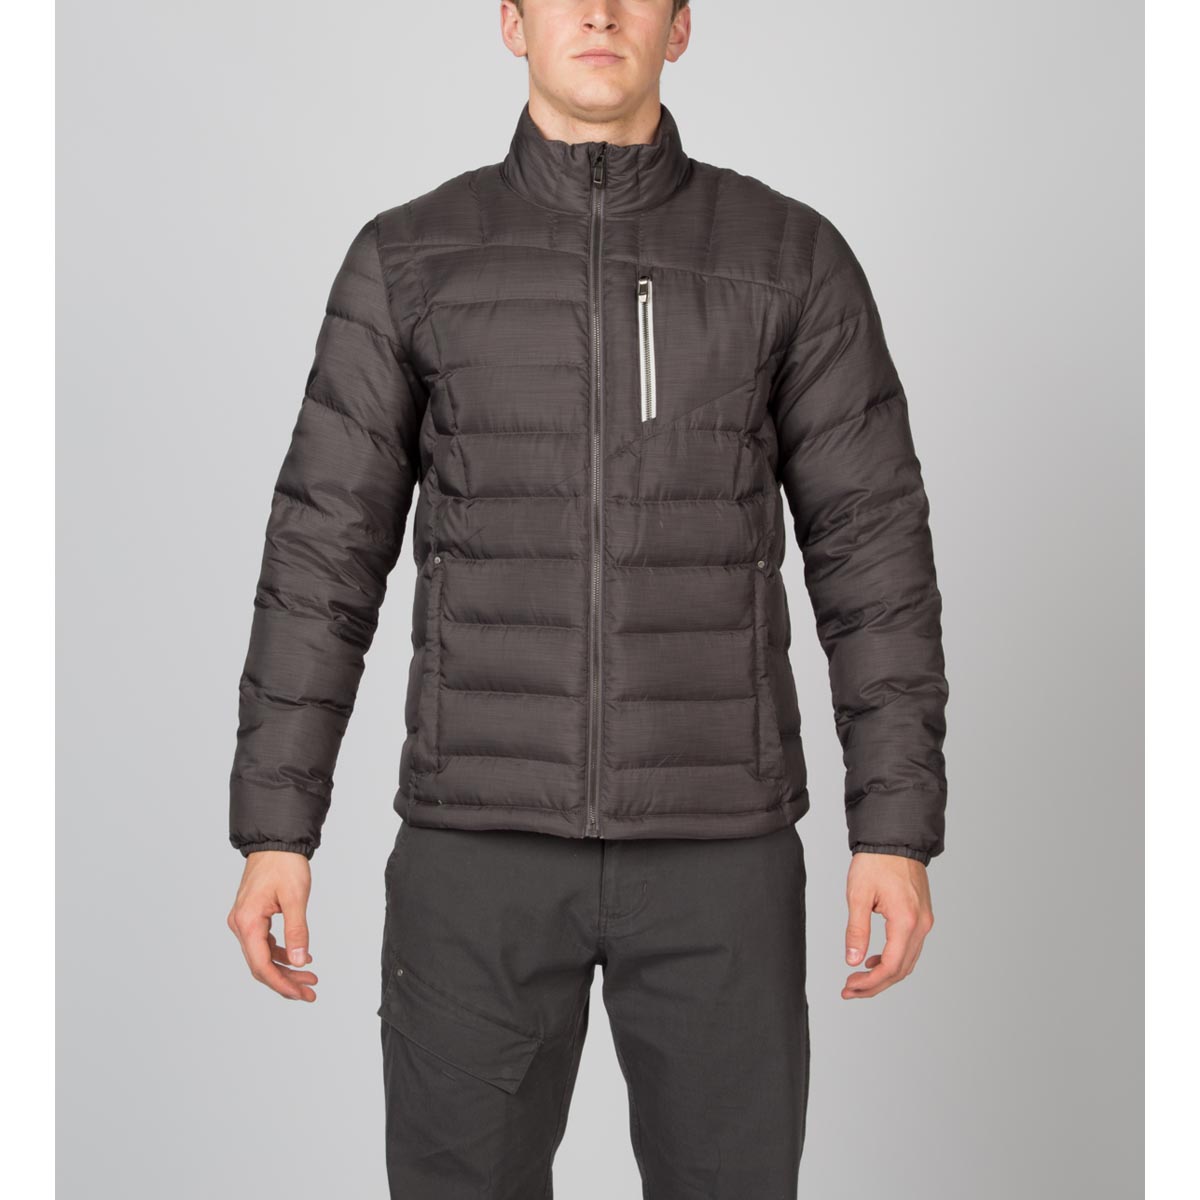 Spyder Mens Dolomite Novelty Full Zip Down Jacket